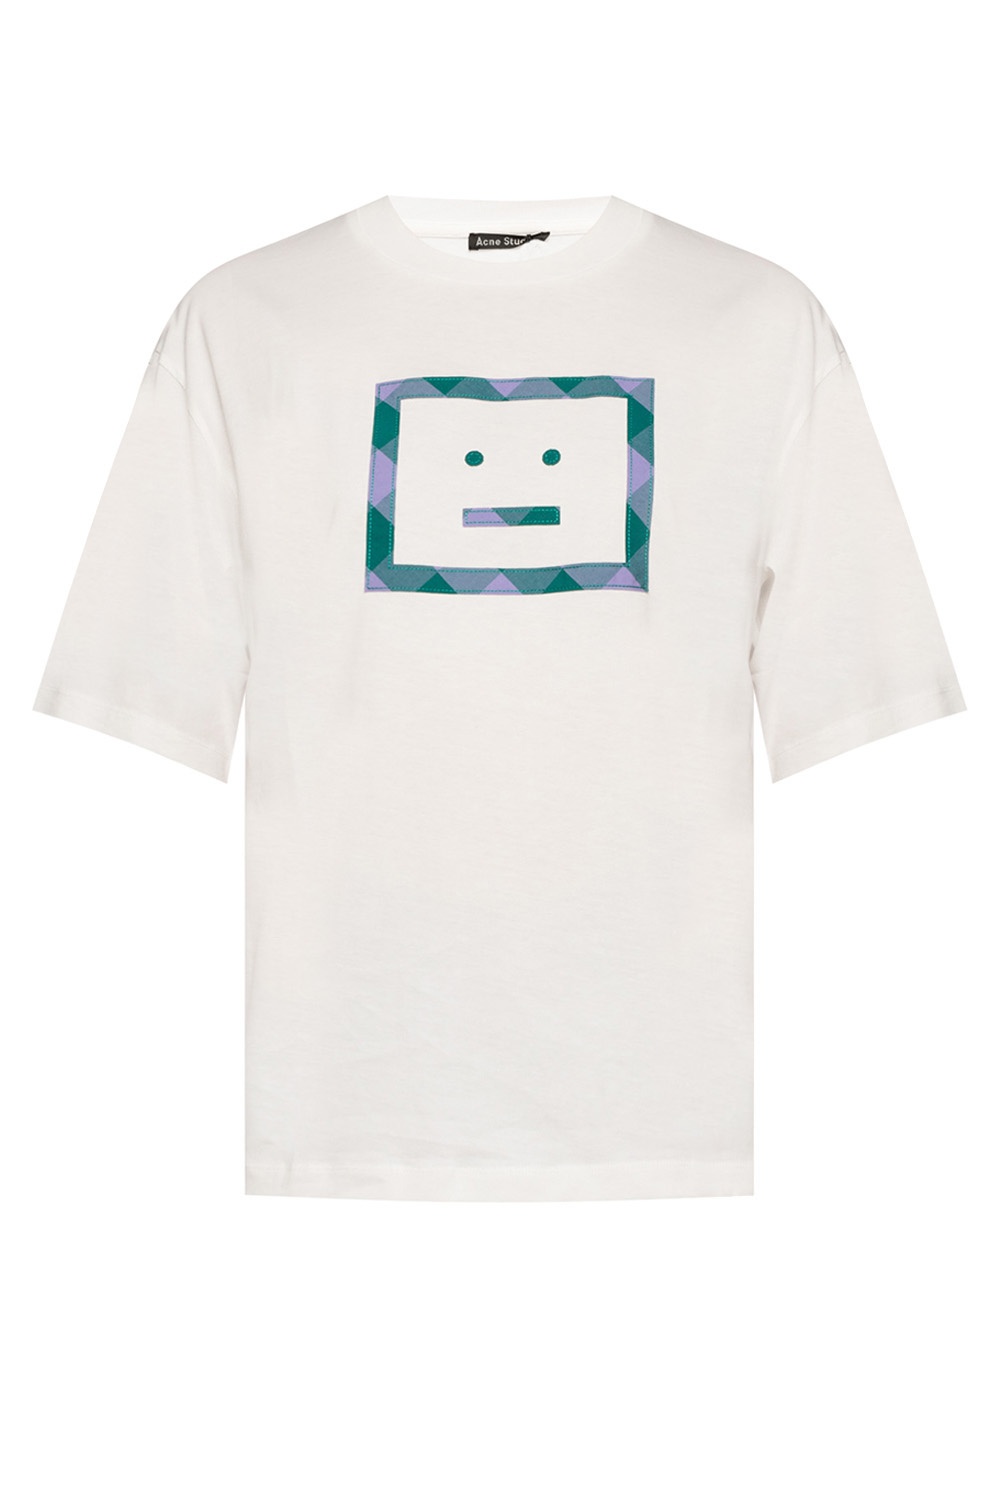 Acne Studios T-shirt with emoticon motif | Women's Clothing | Vitkac